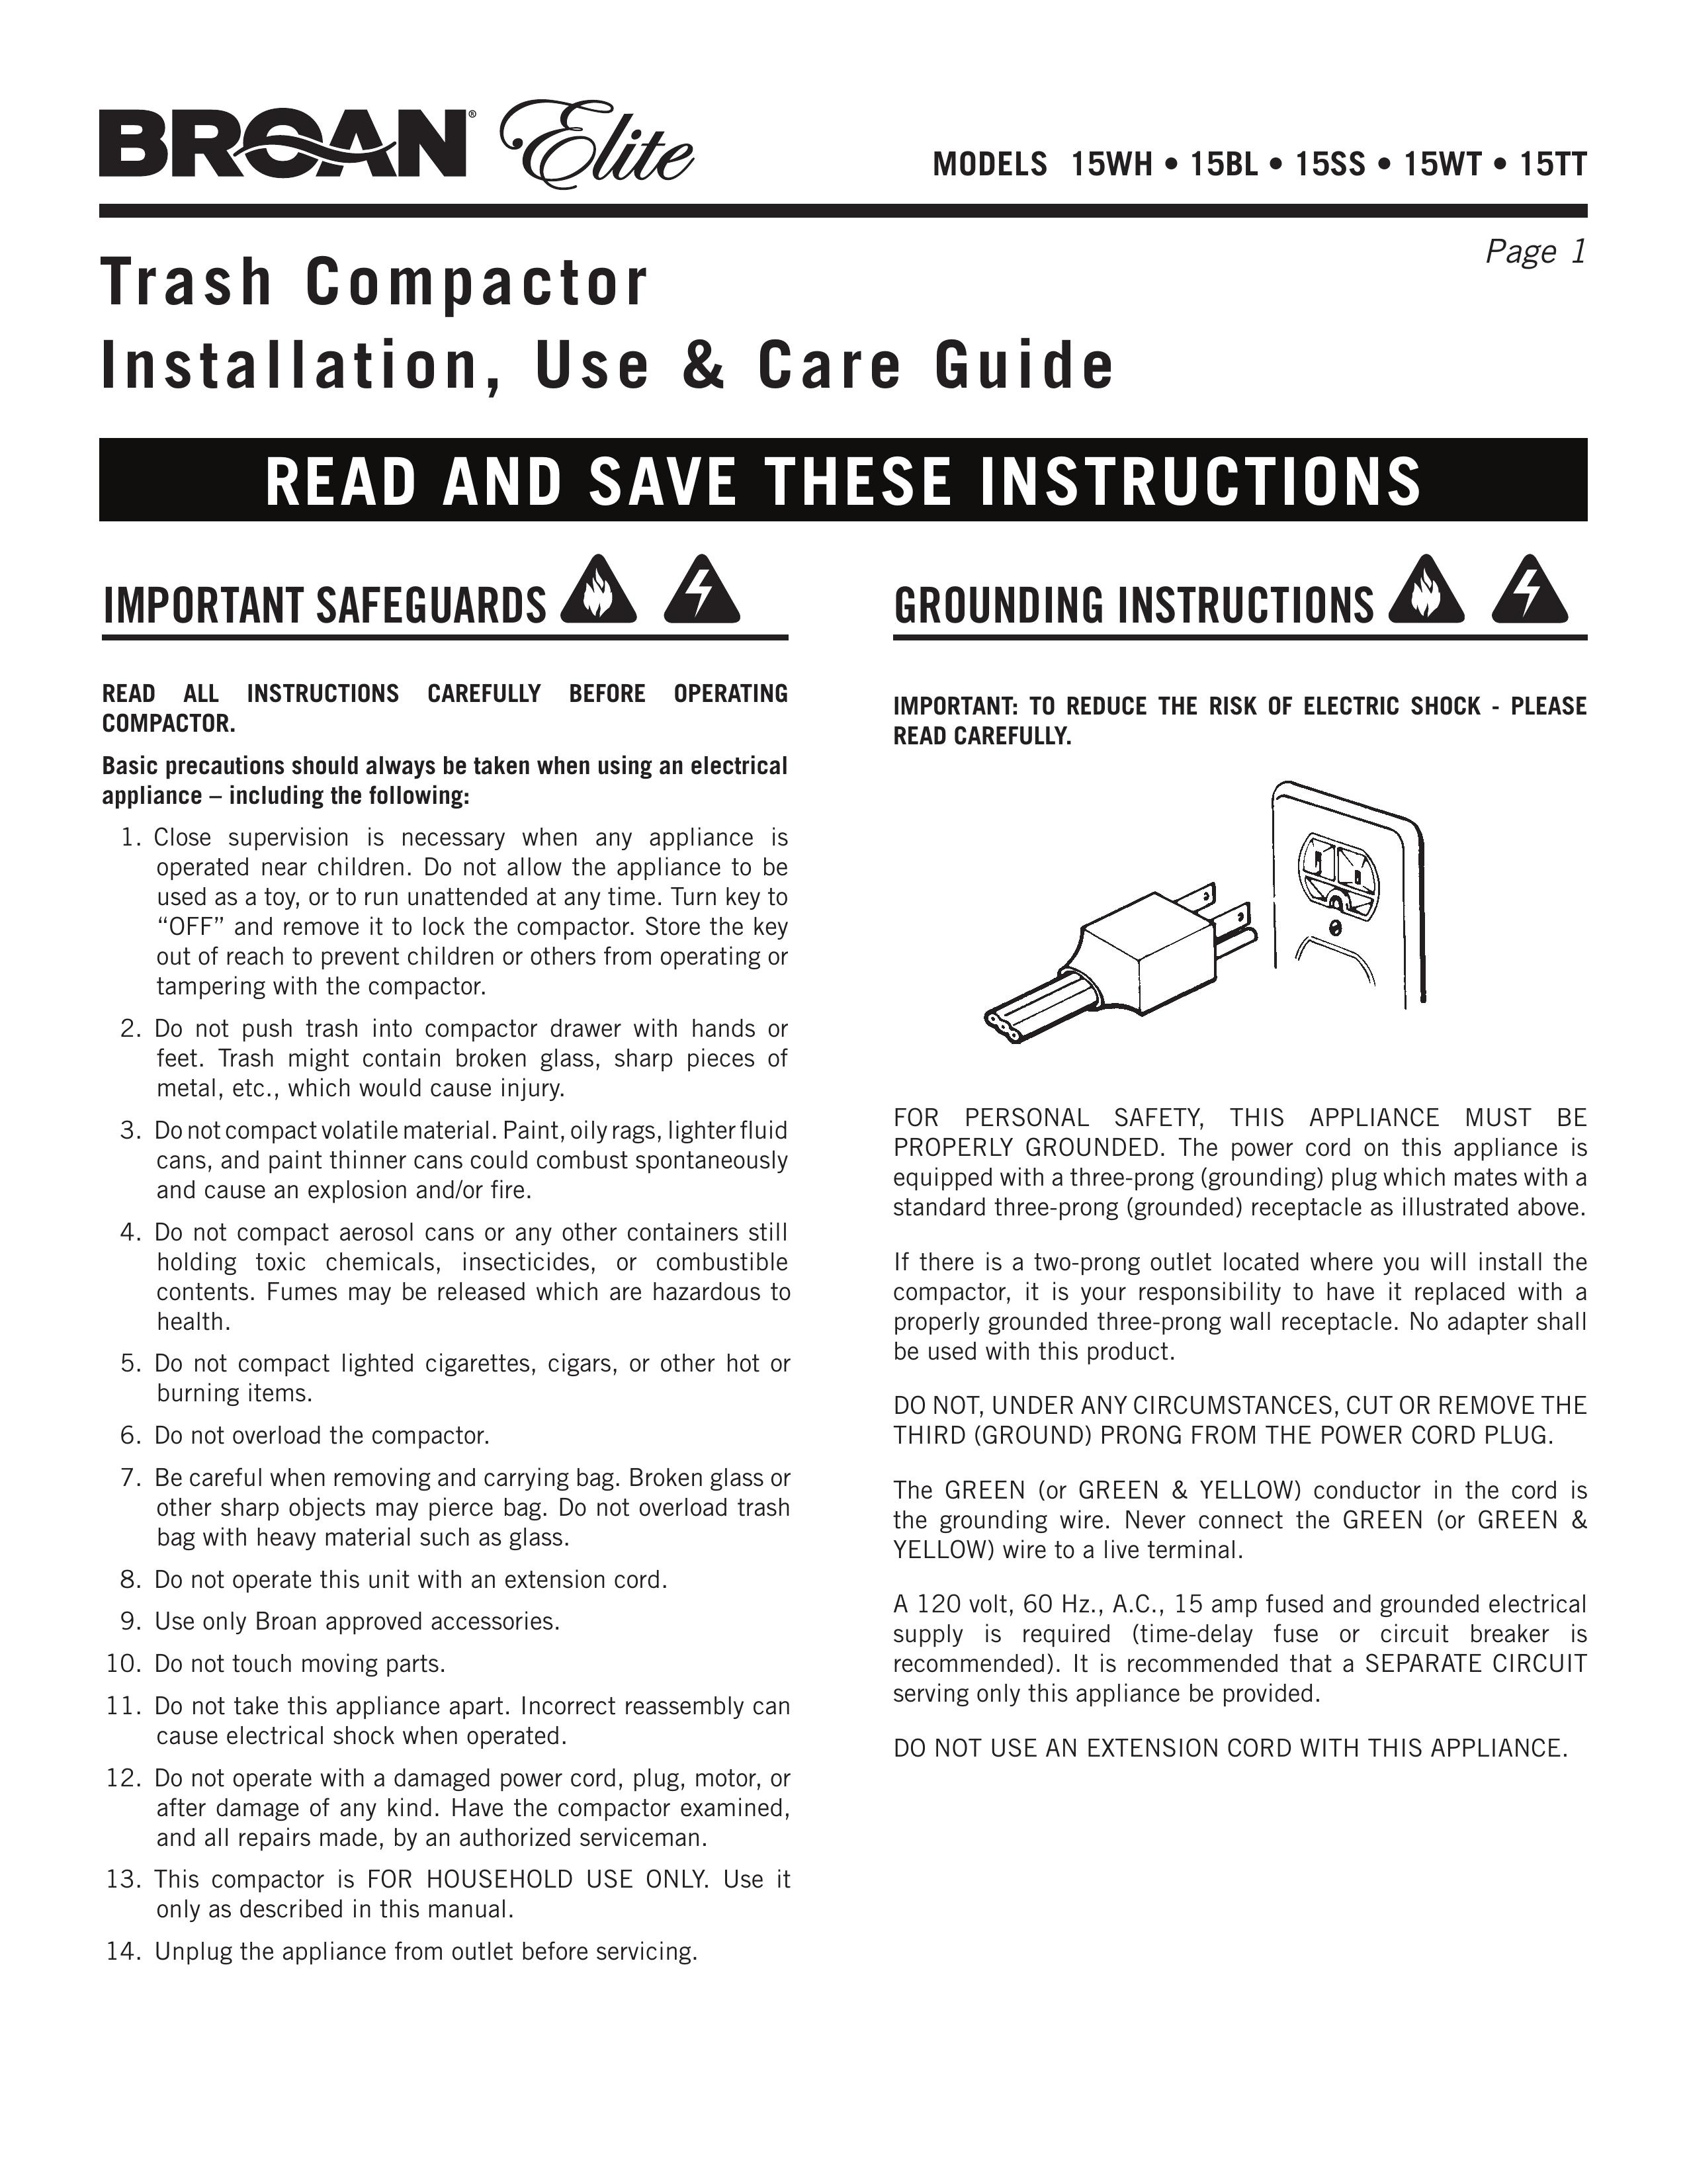 Broan 15WH Trash Compactor User Manual